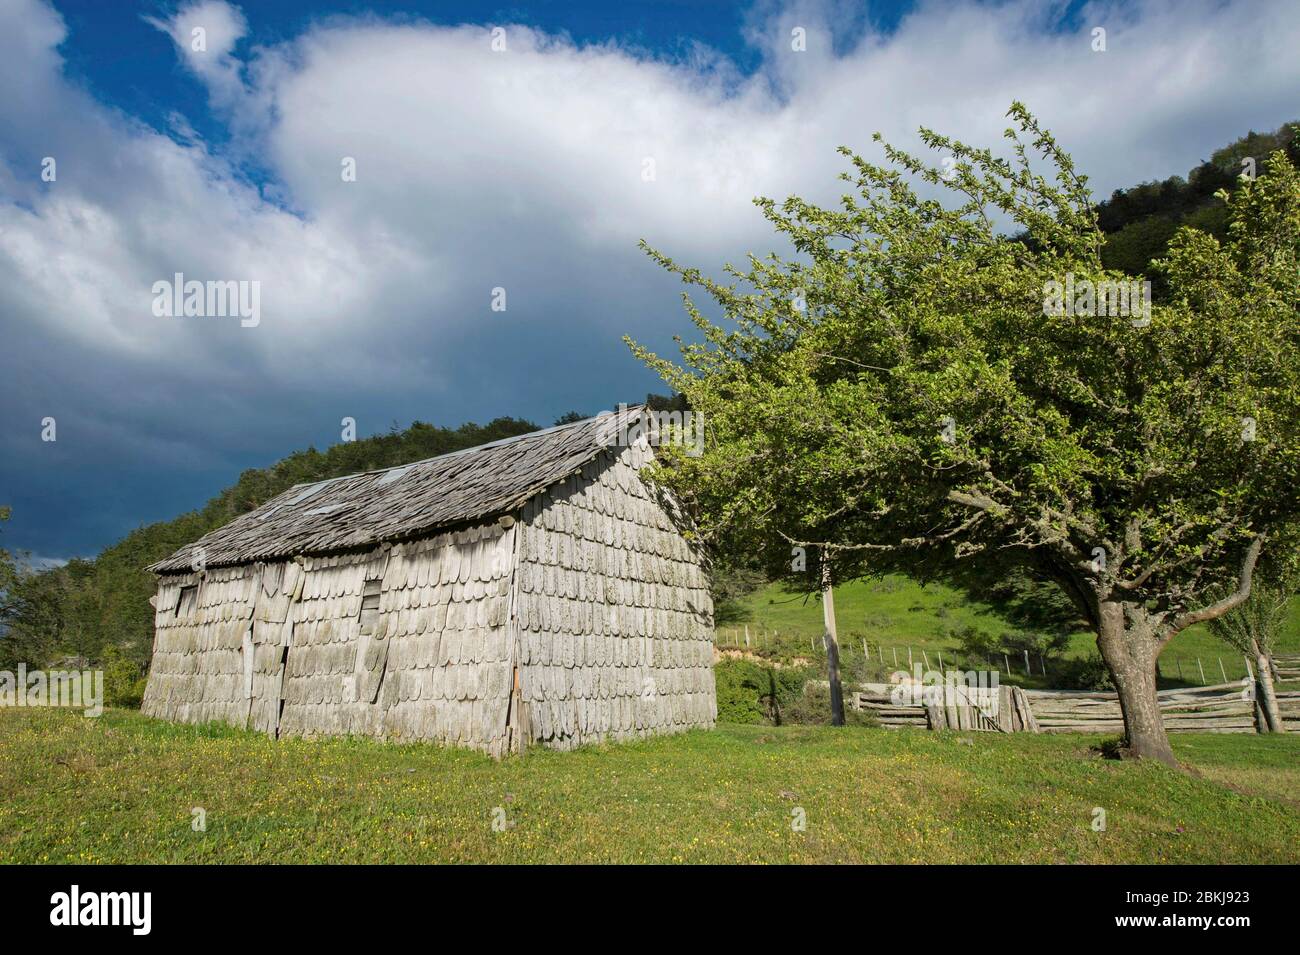 Chile, Patagonia, Aysen, Coyhaique, typical Aysen patagonian hut, in shingles Stock Photo